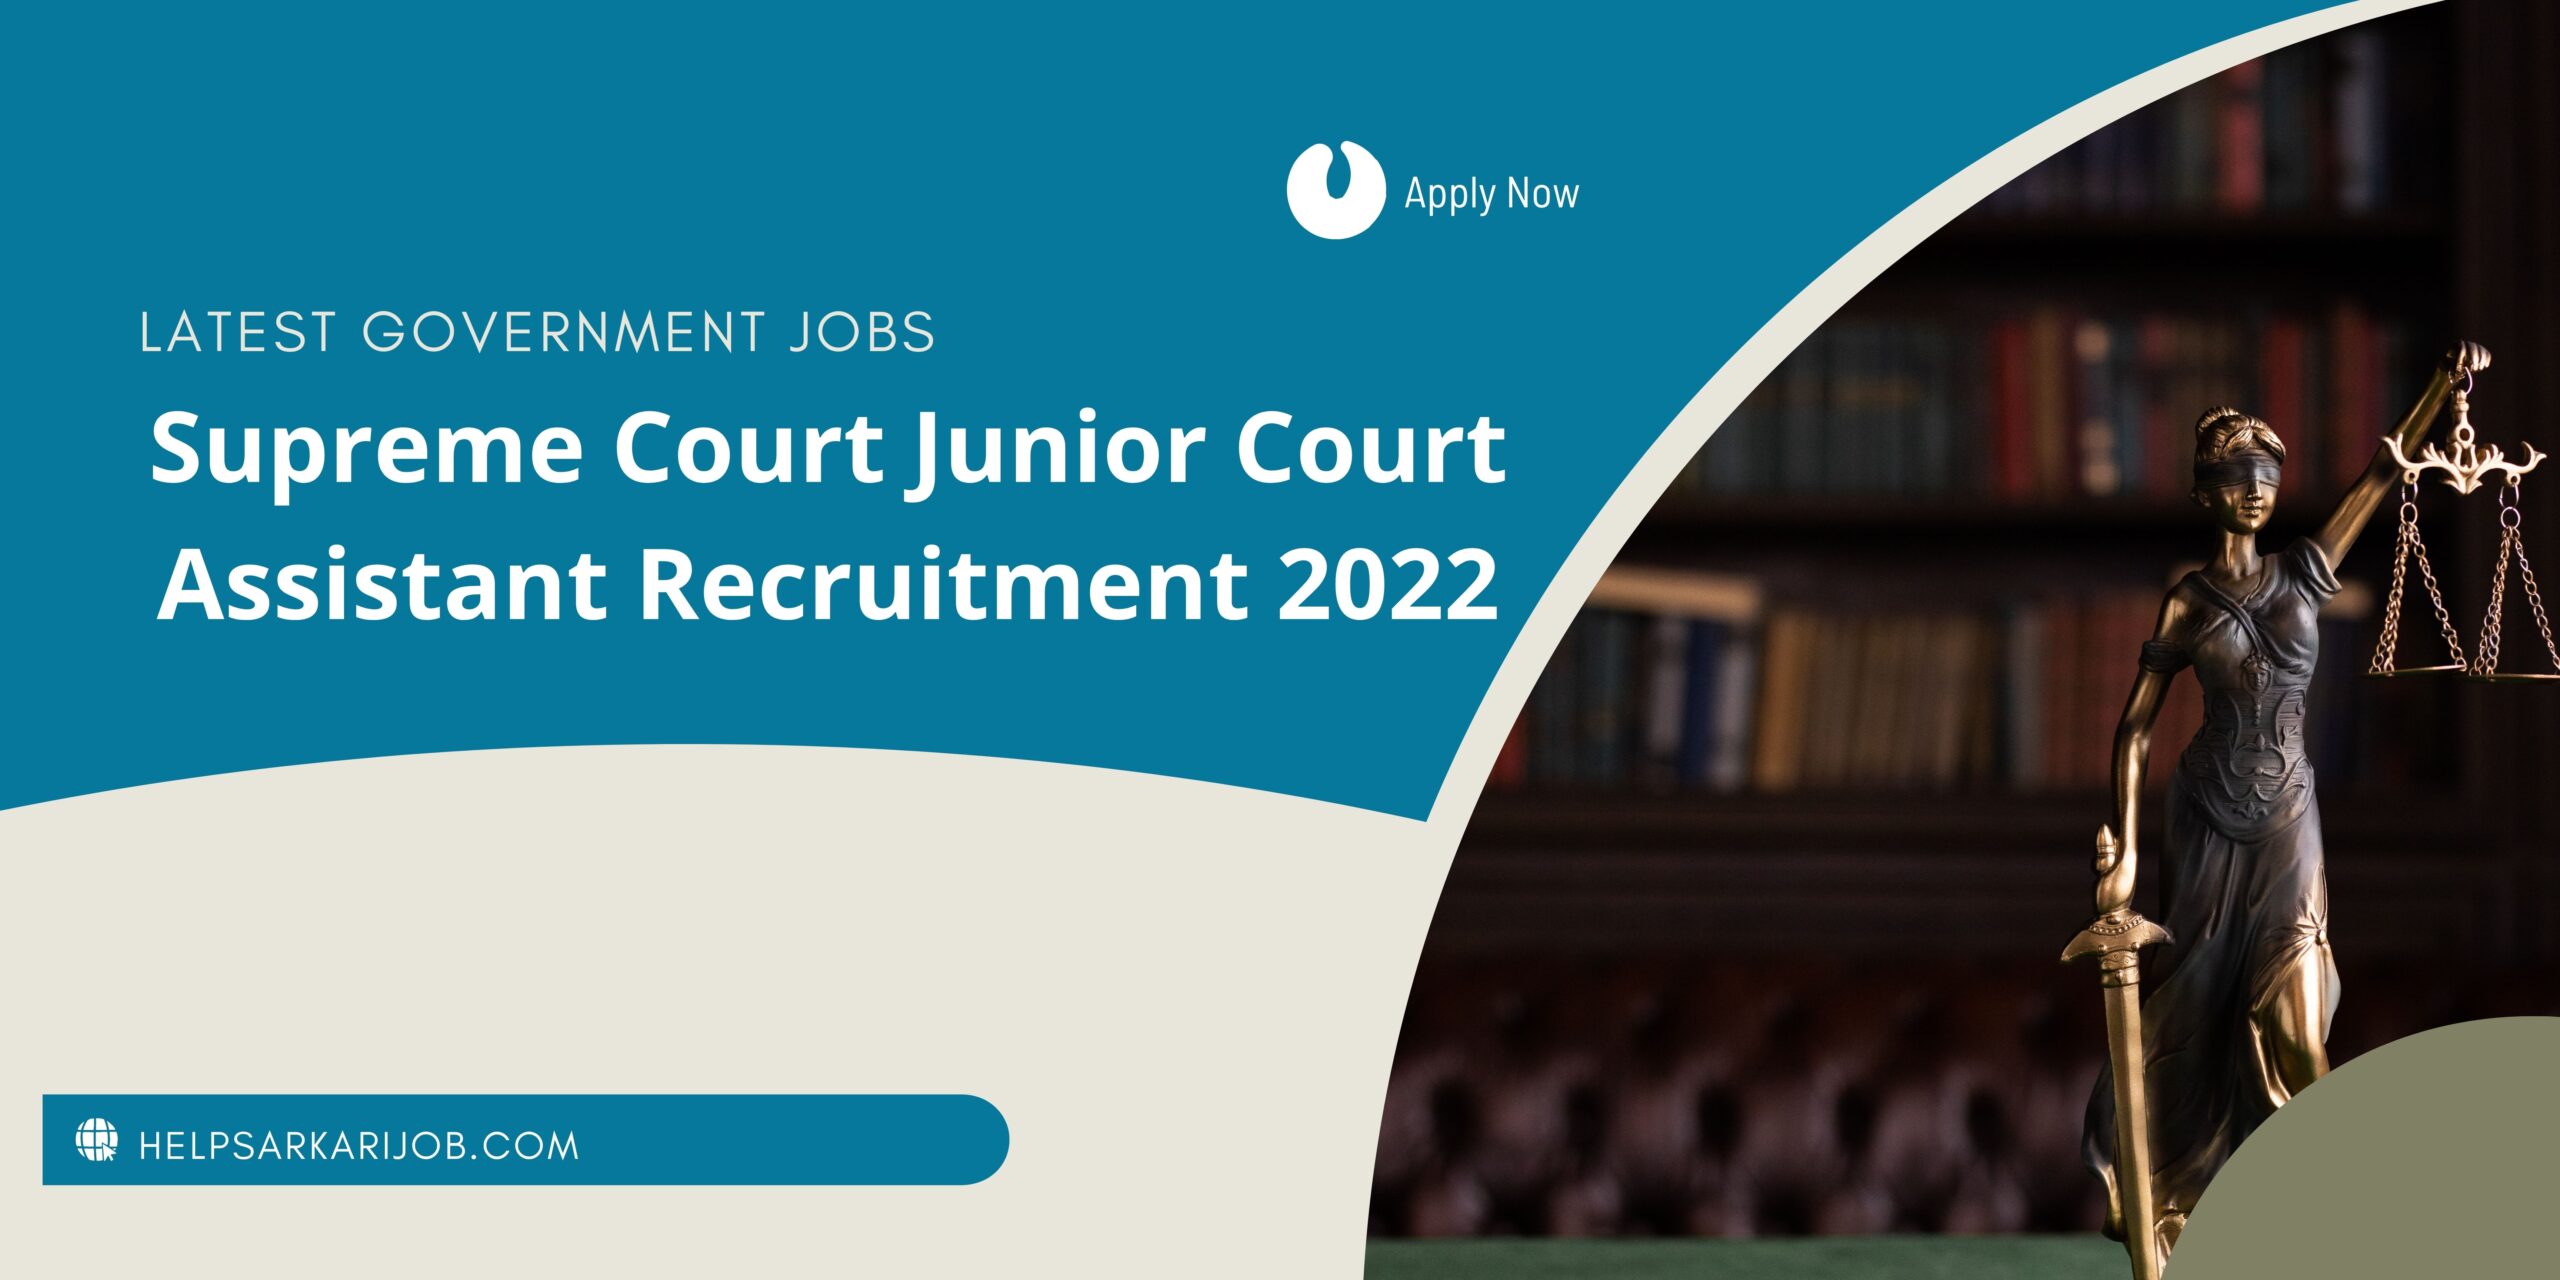 Supreme Court Junior Court Assistant Recruitment 2022